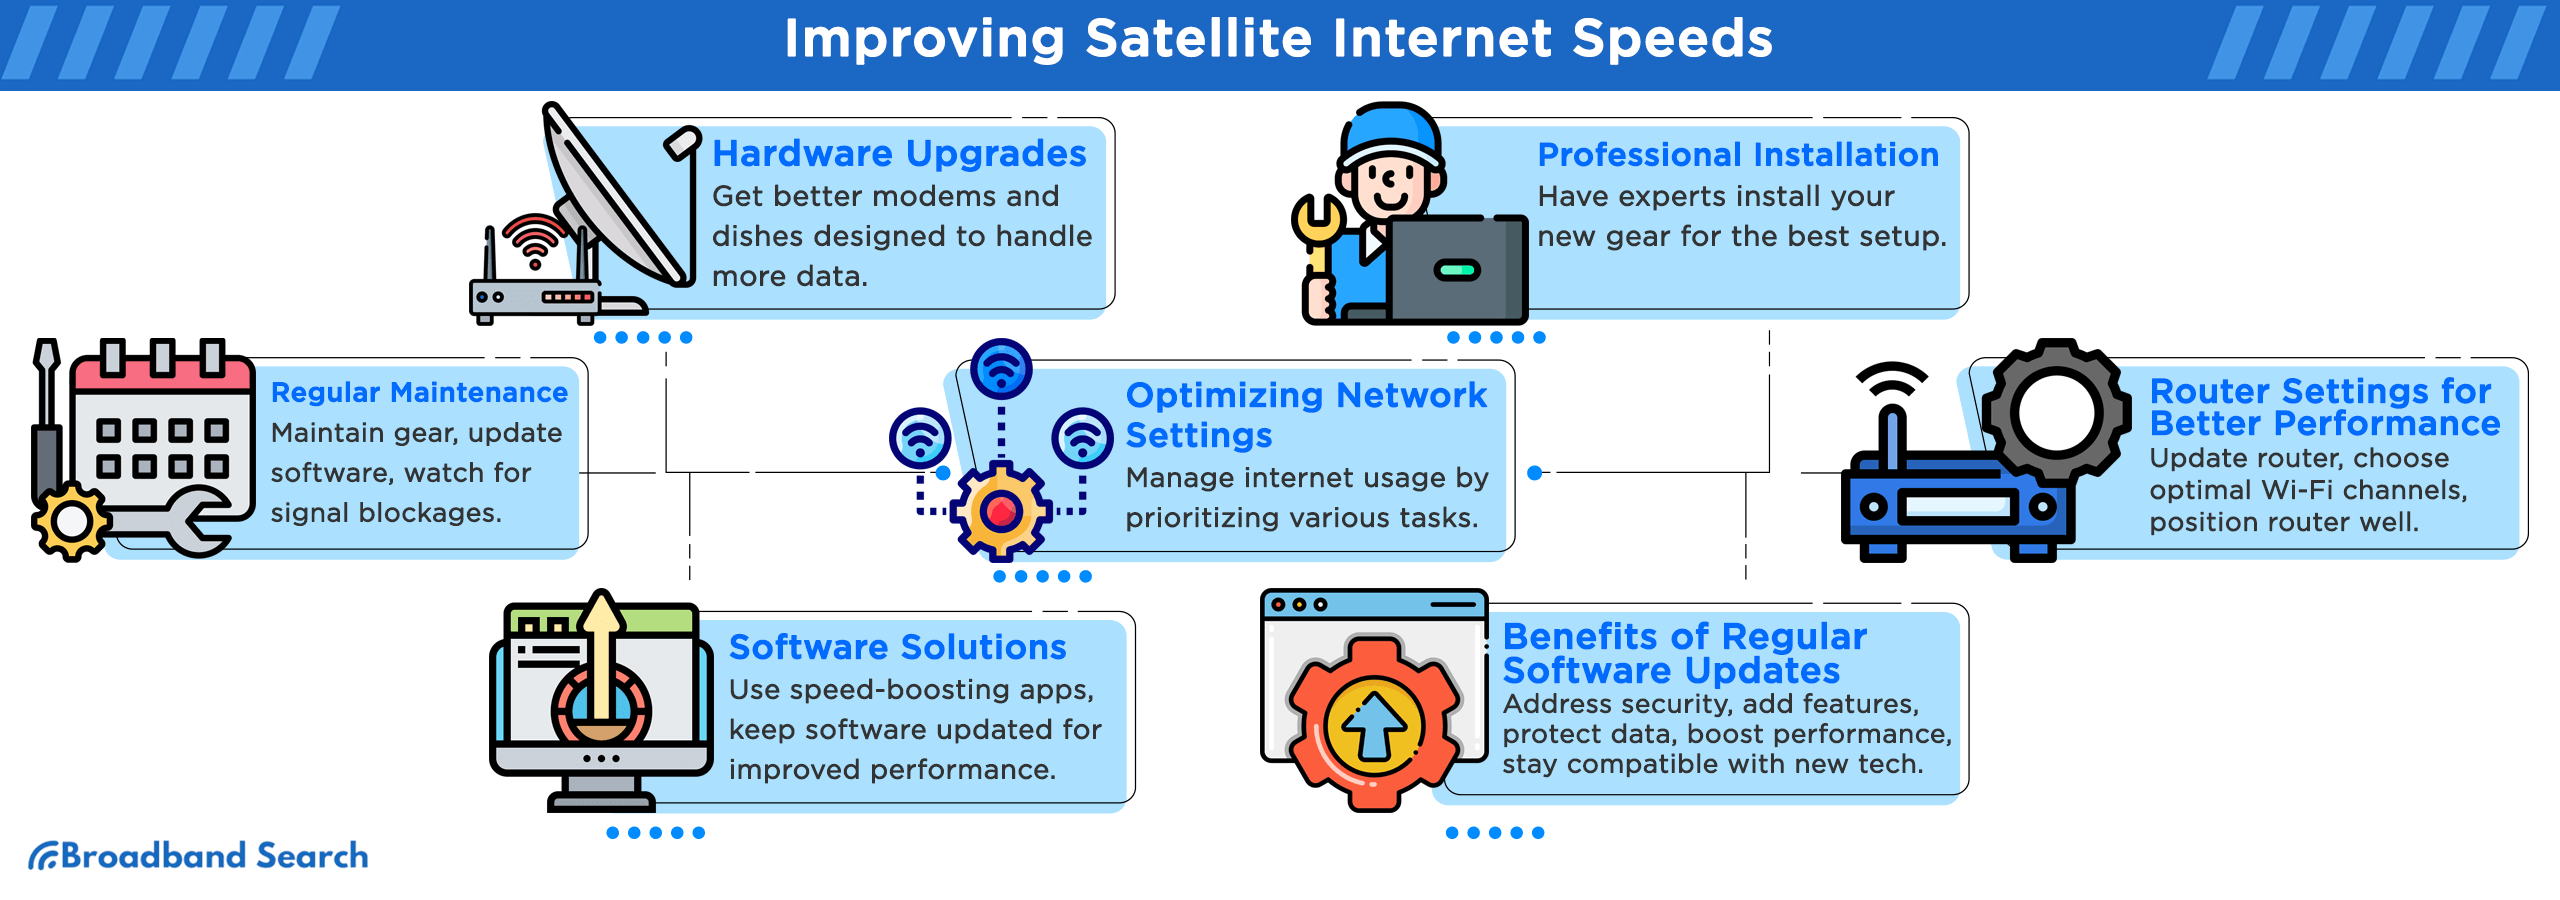 improving satellite internet speeds